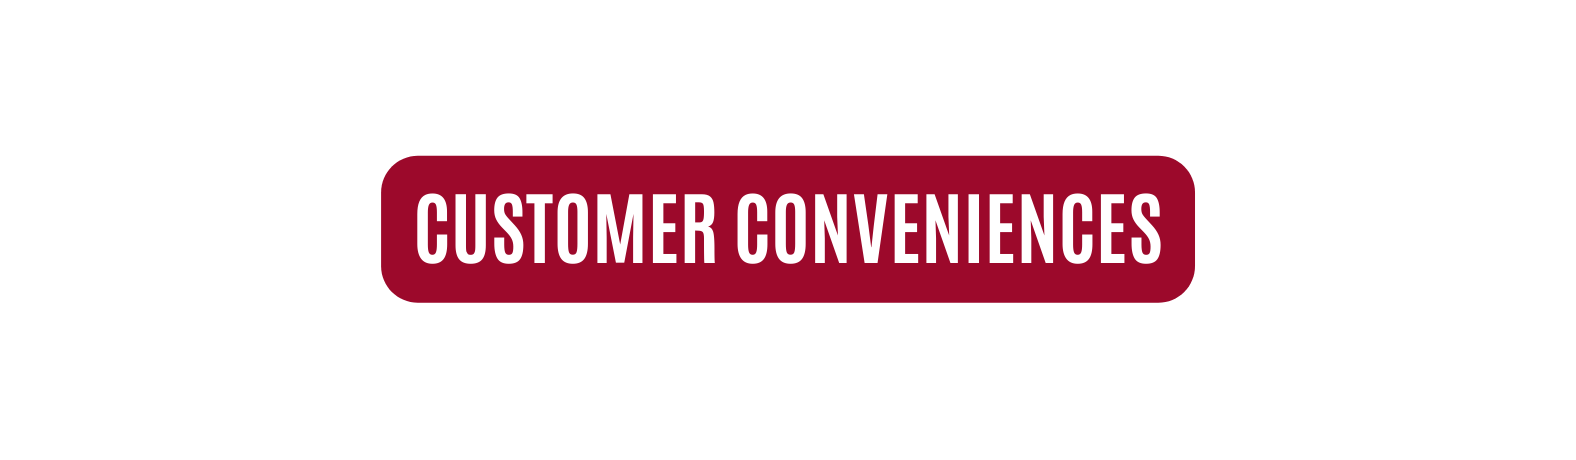 customer conveniences